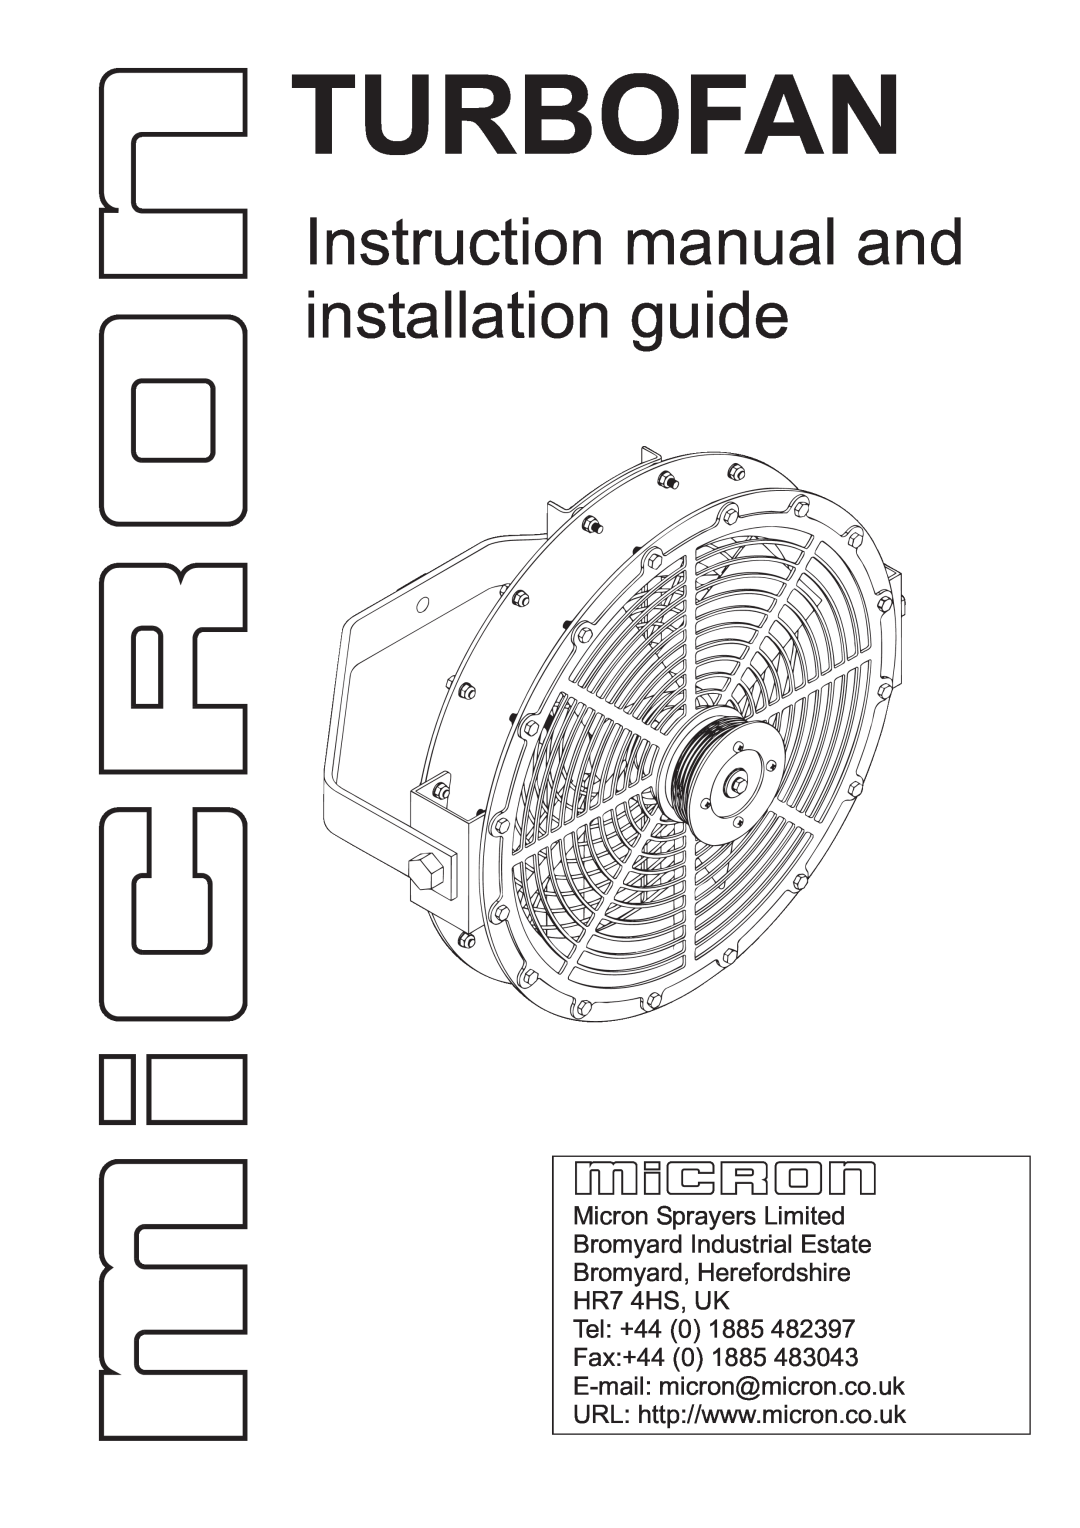 Micron Technology Turbofan instruction manual Instruction manual and installation guide, Micron Sprayers Limited 